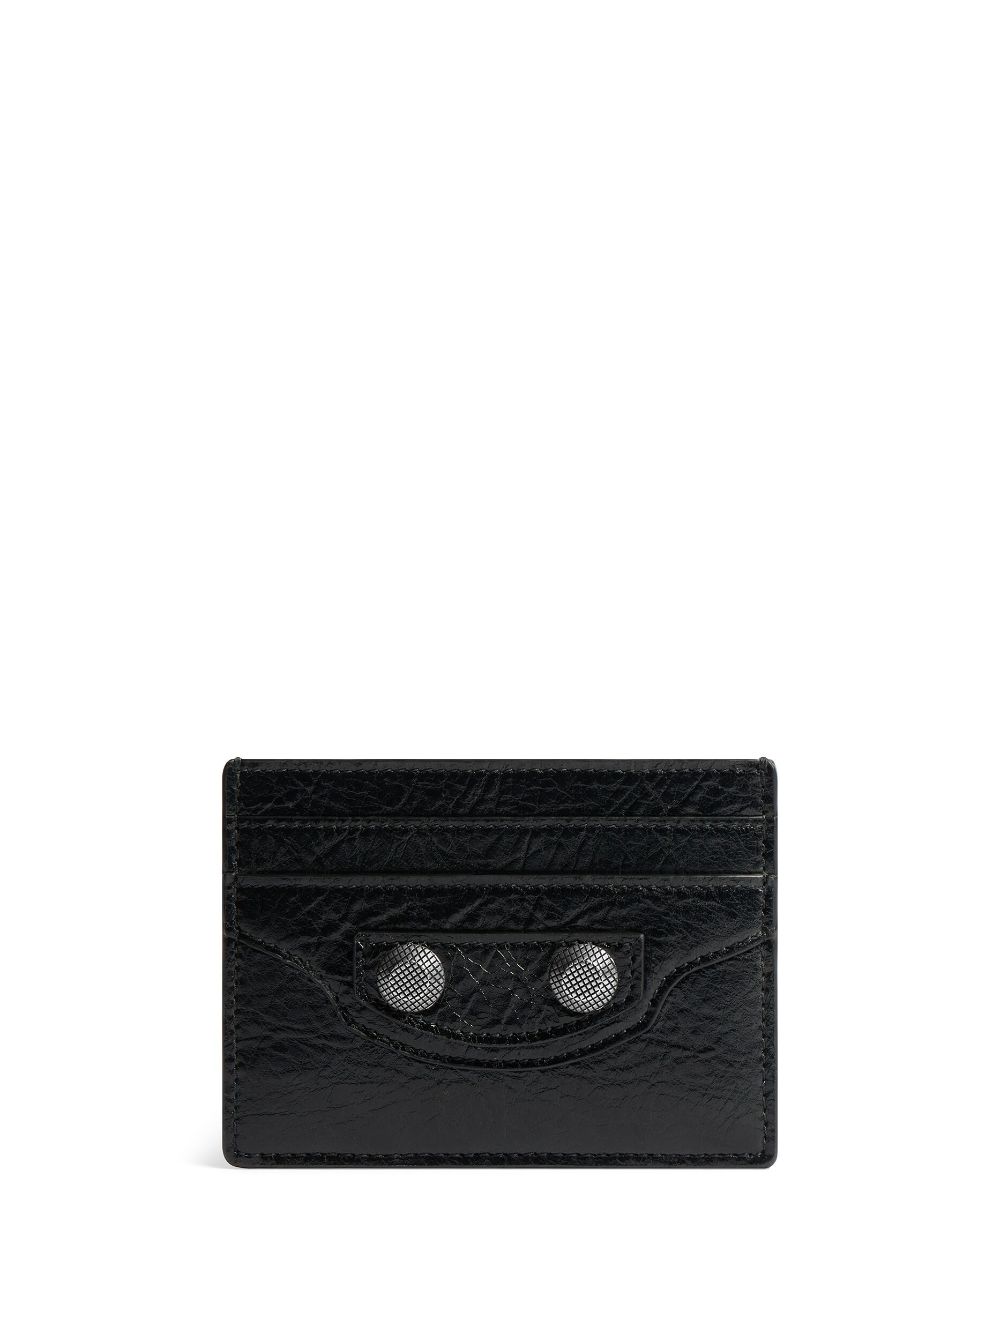 Balenciaga Neo Classic Card Holder in Black